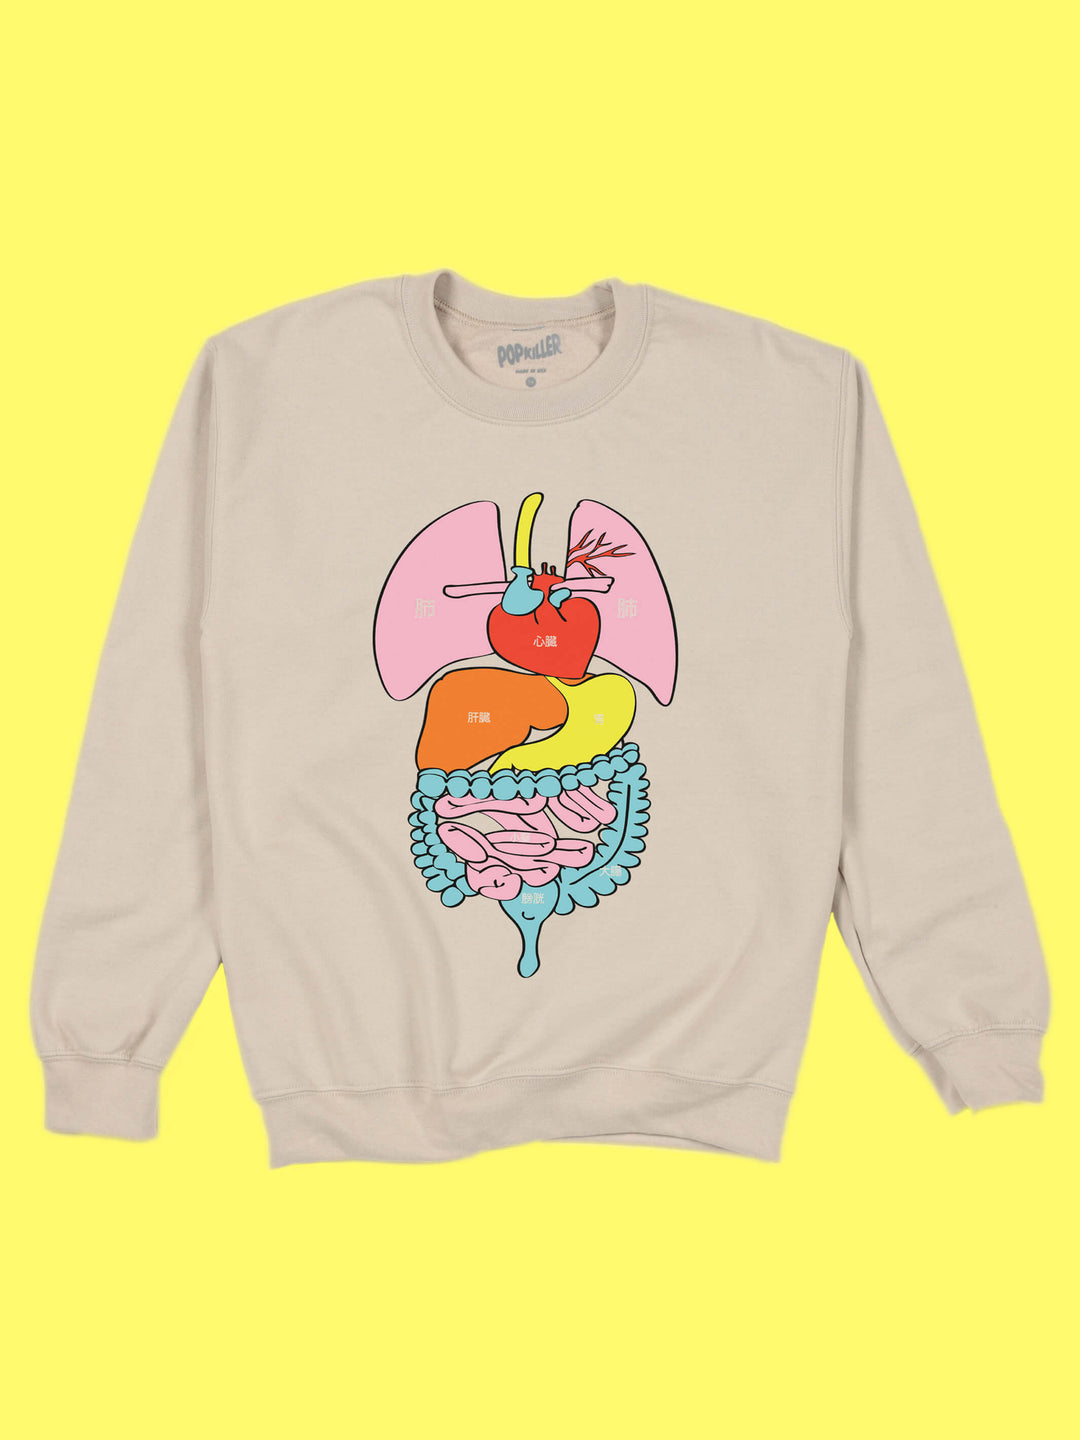 Japanese internal organ sweater.